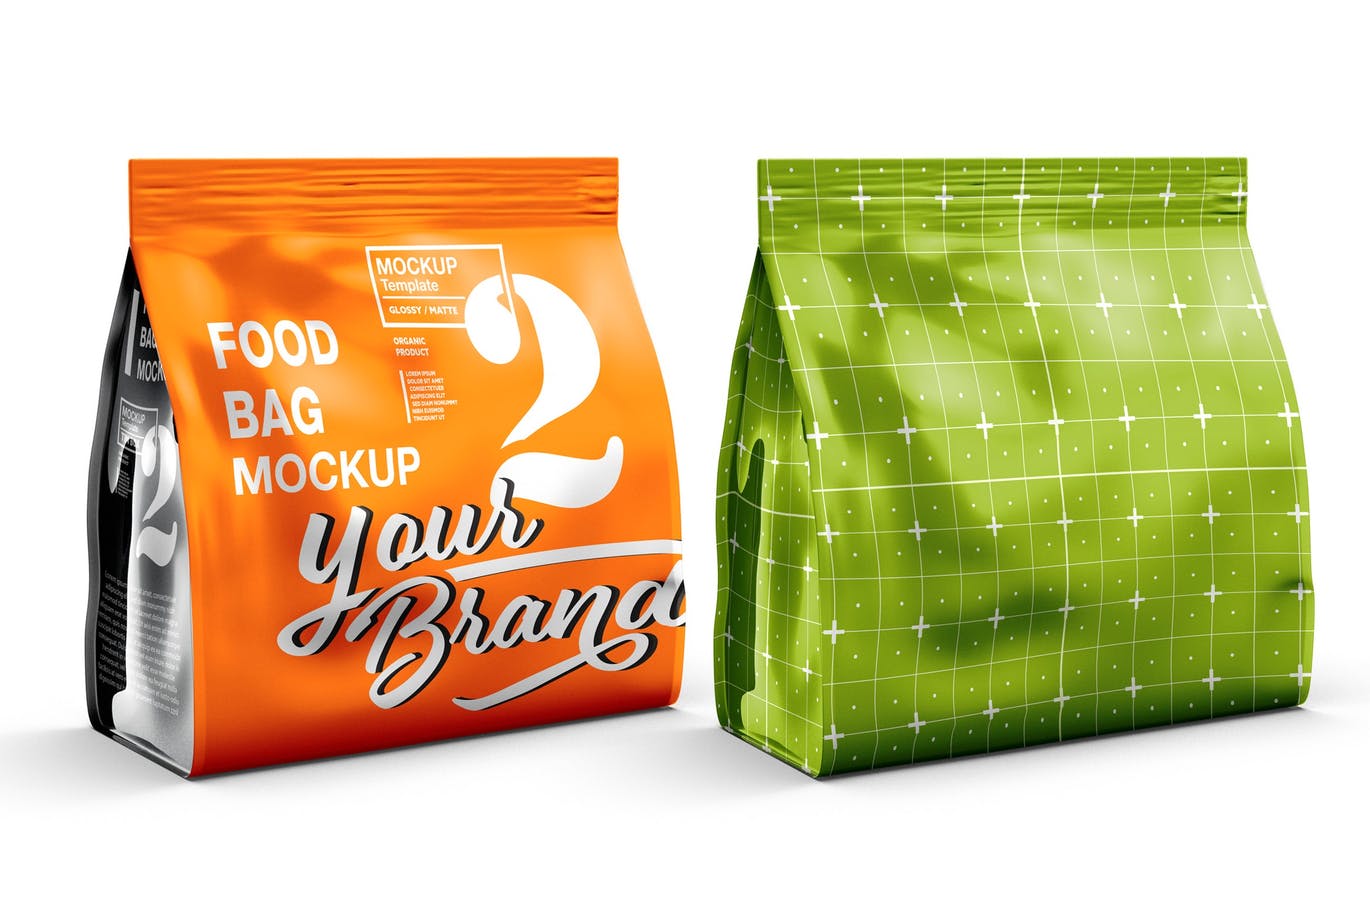 A food bag mockup template